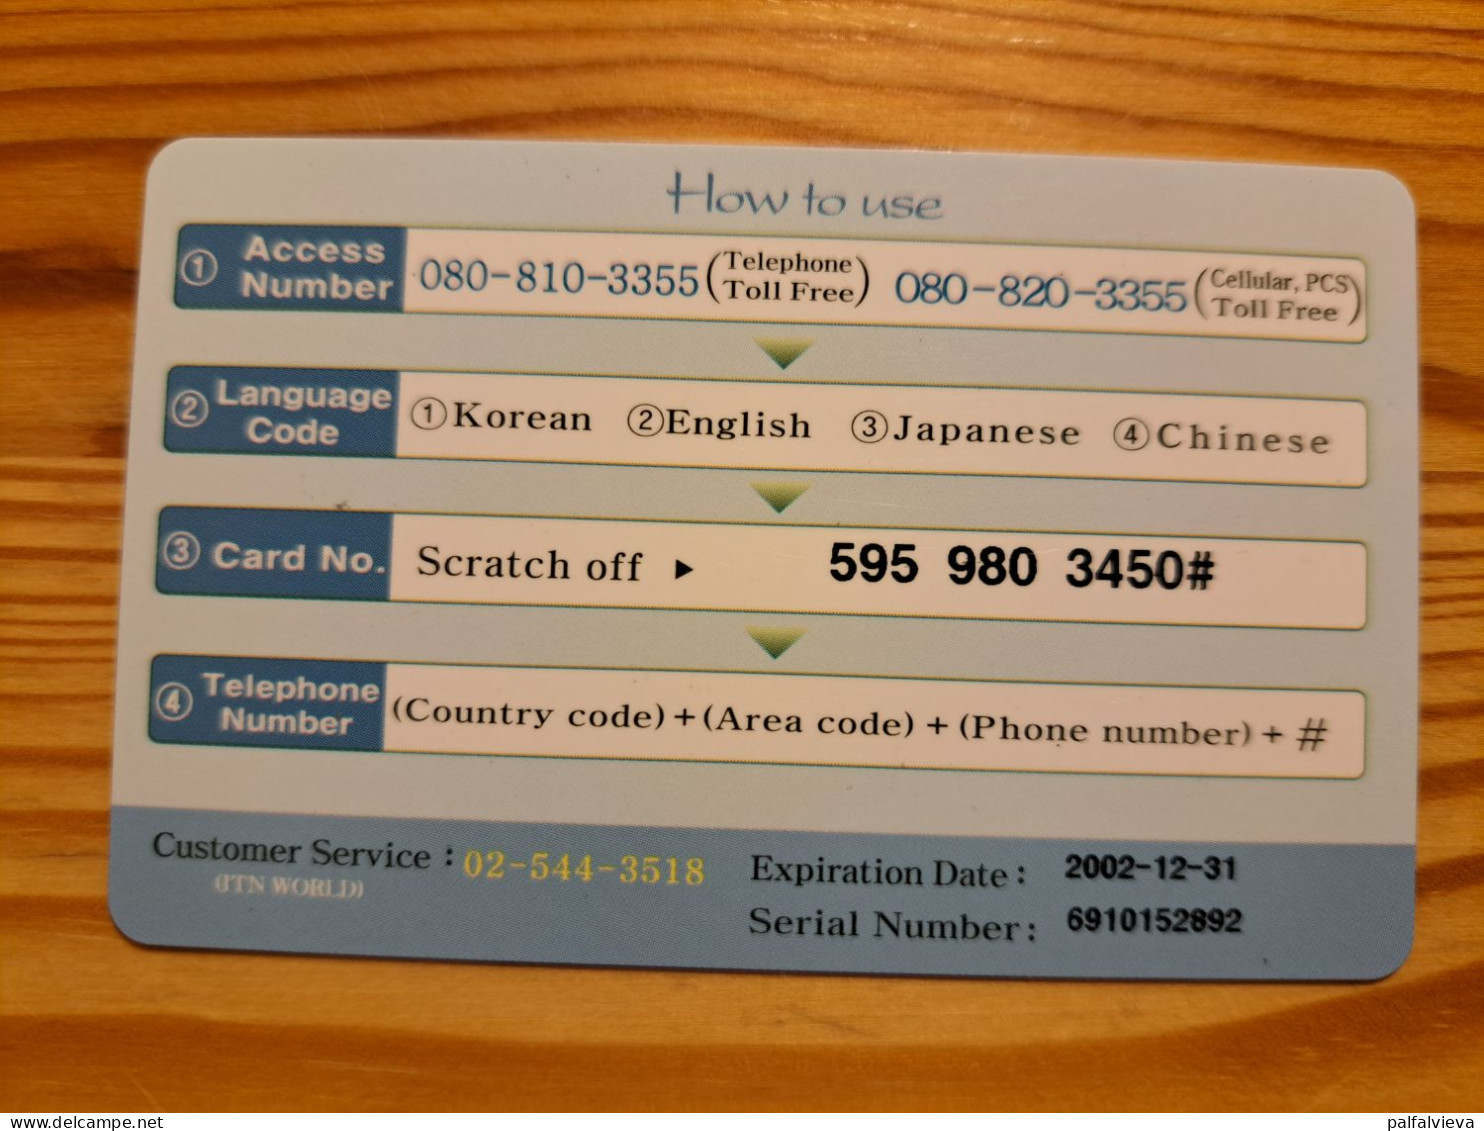 Prepaid Phonecard South Korea, Best Philippines Card - Flag - Corea Del Sur